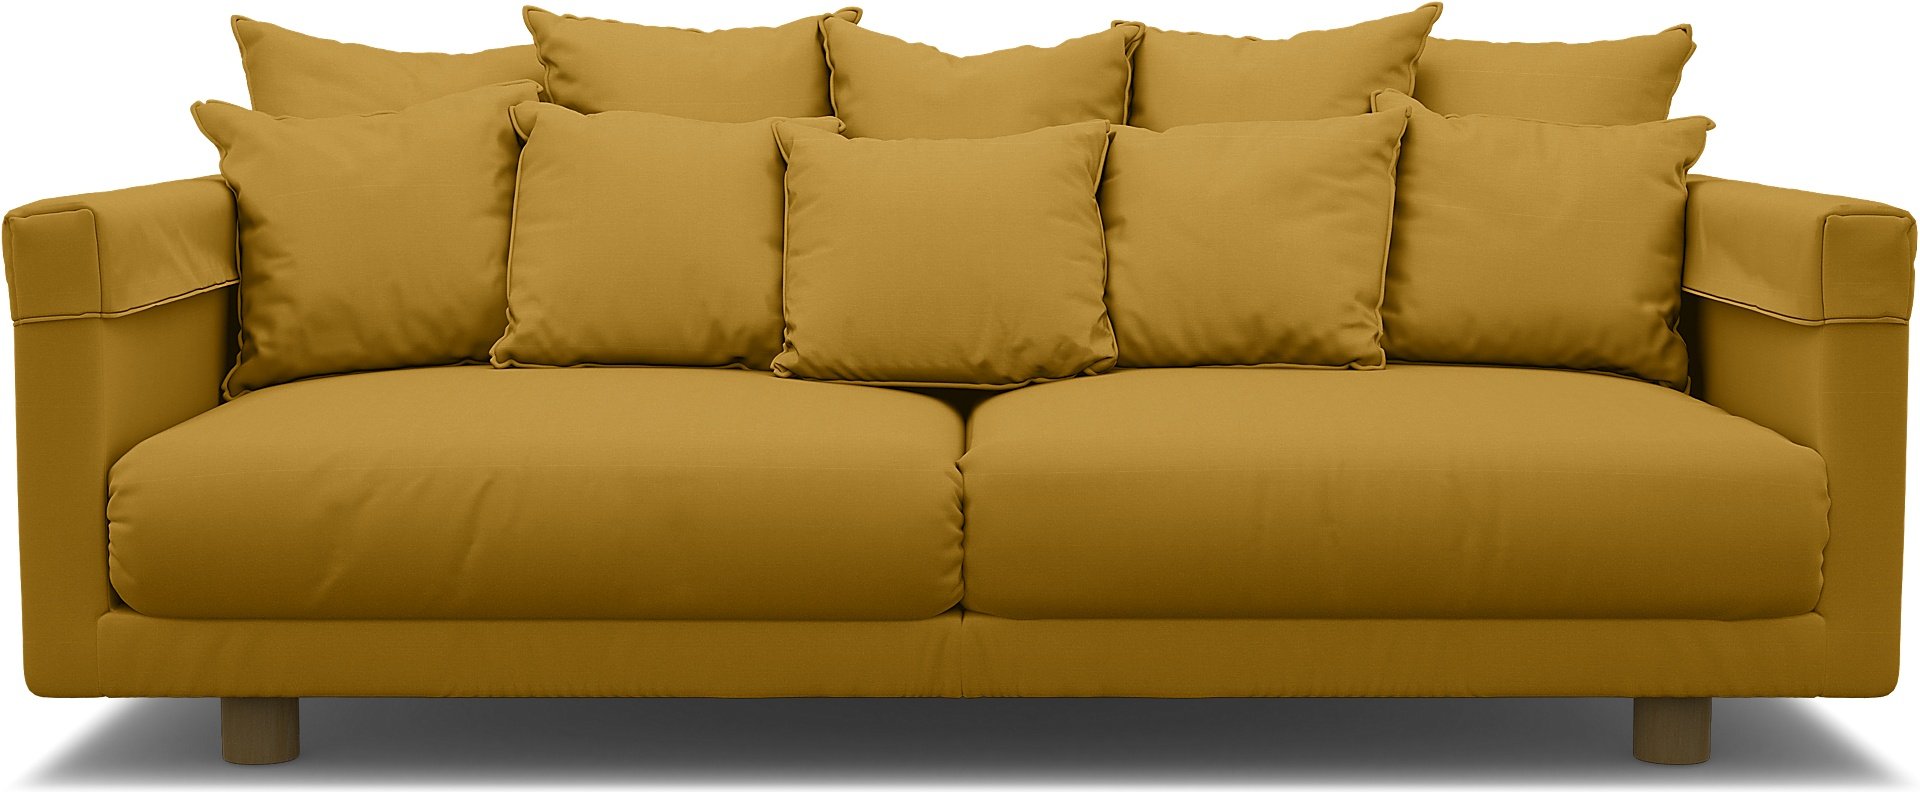 IKEA - Stockholm 2017 3 Seater Sofa Cover, Honey Mustard, Cotton - Bemz